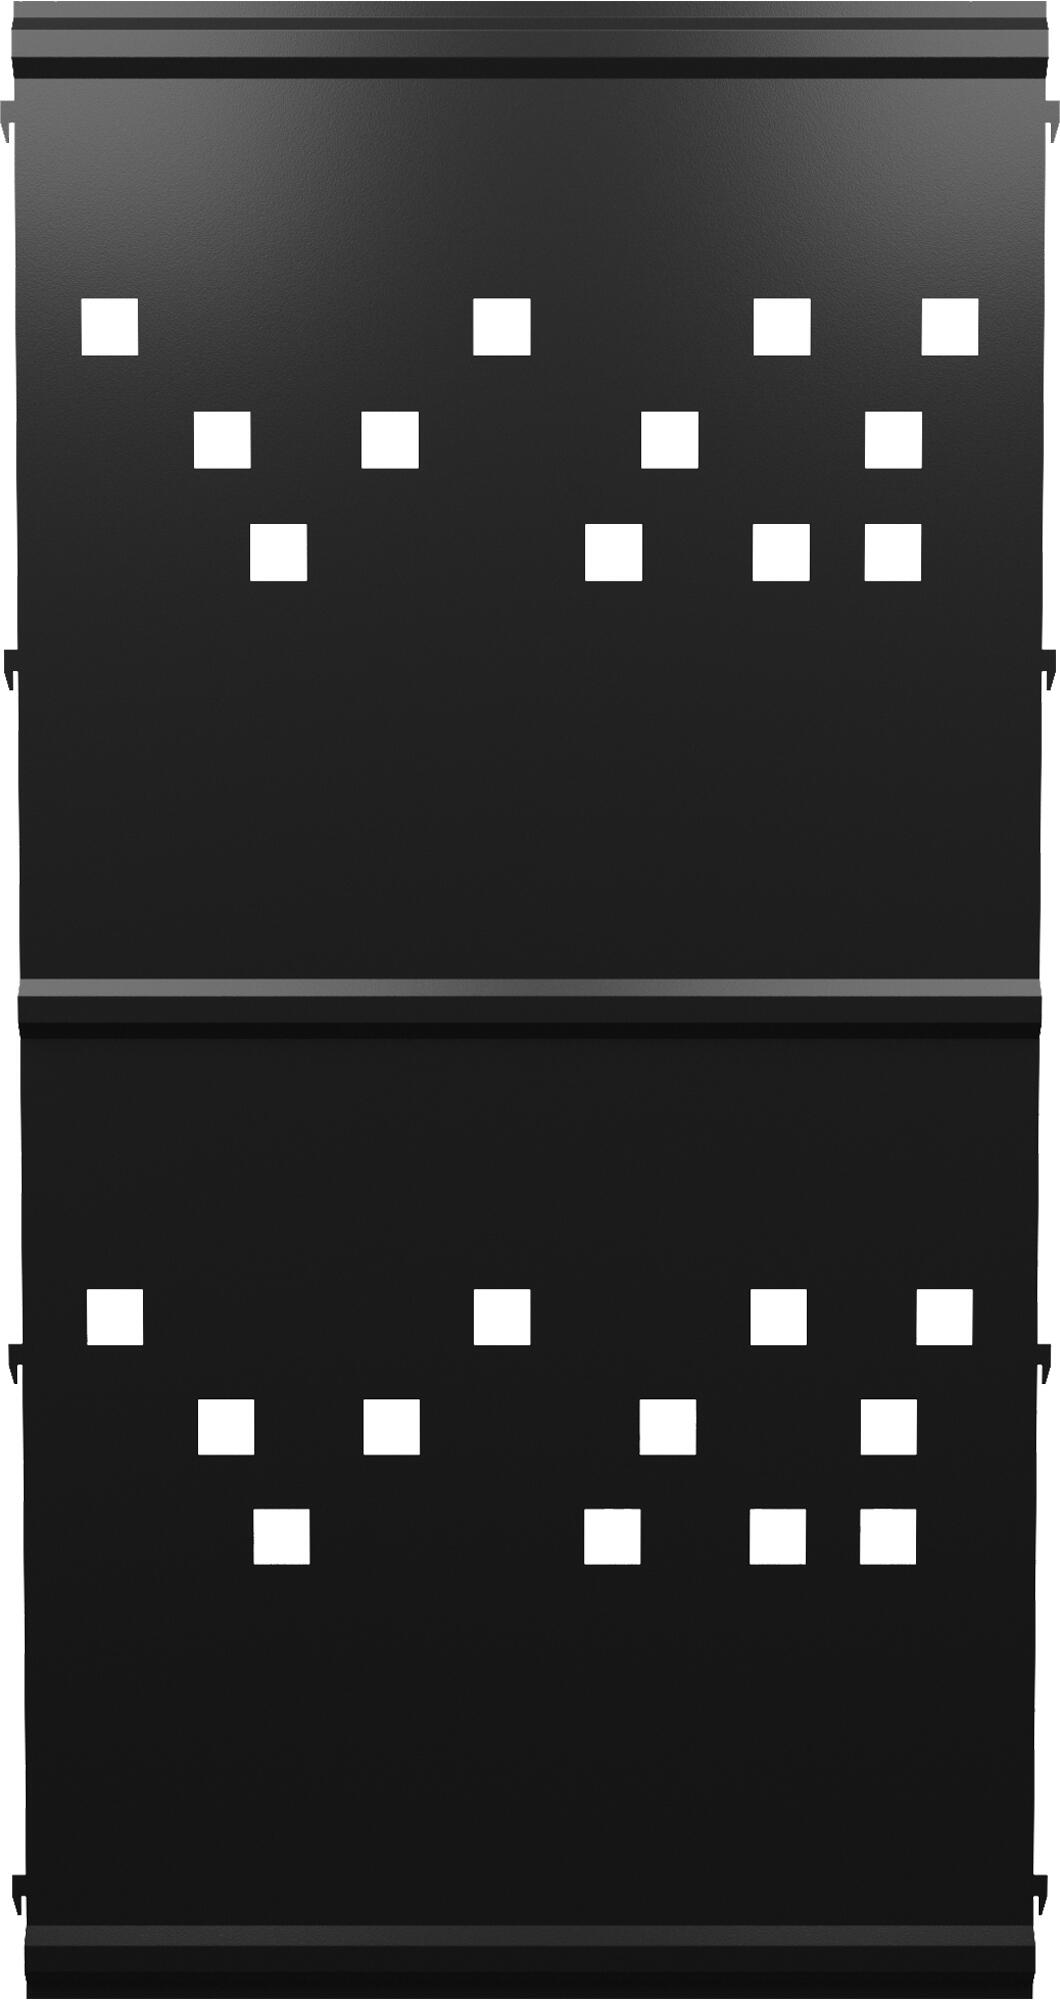 Panel remate valla acero galvanizado franja cuadros negro 144x73,5 cm